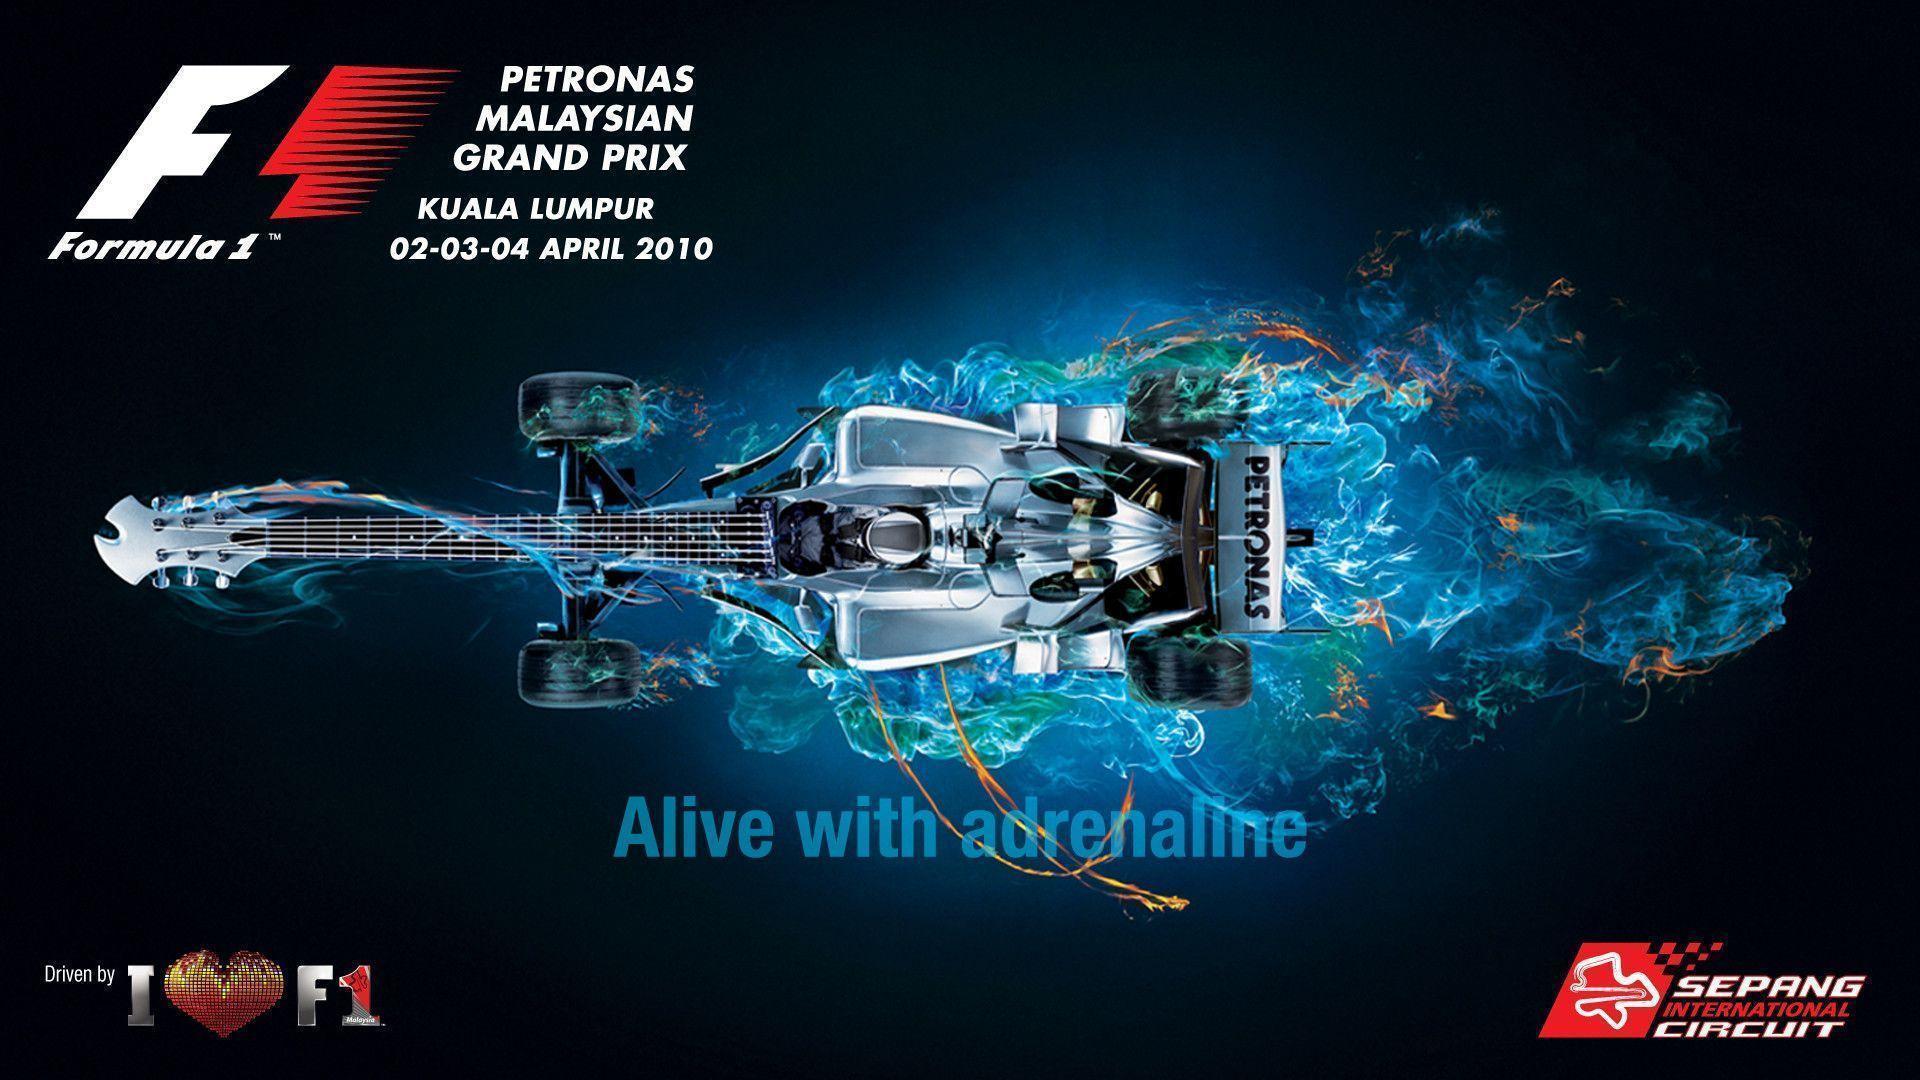 Malaysian Grand Prix Petronas Flyer